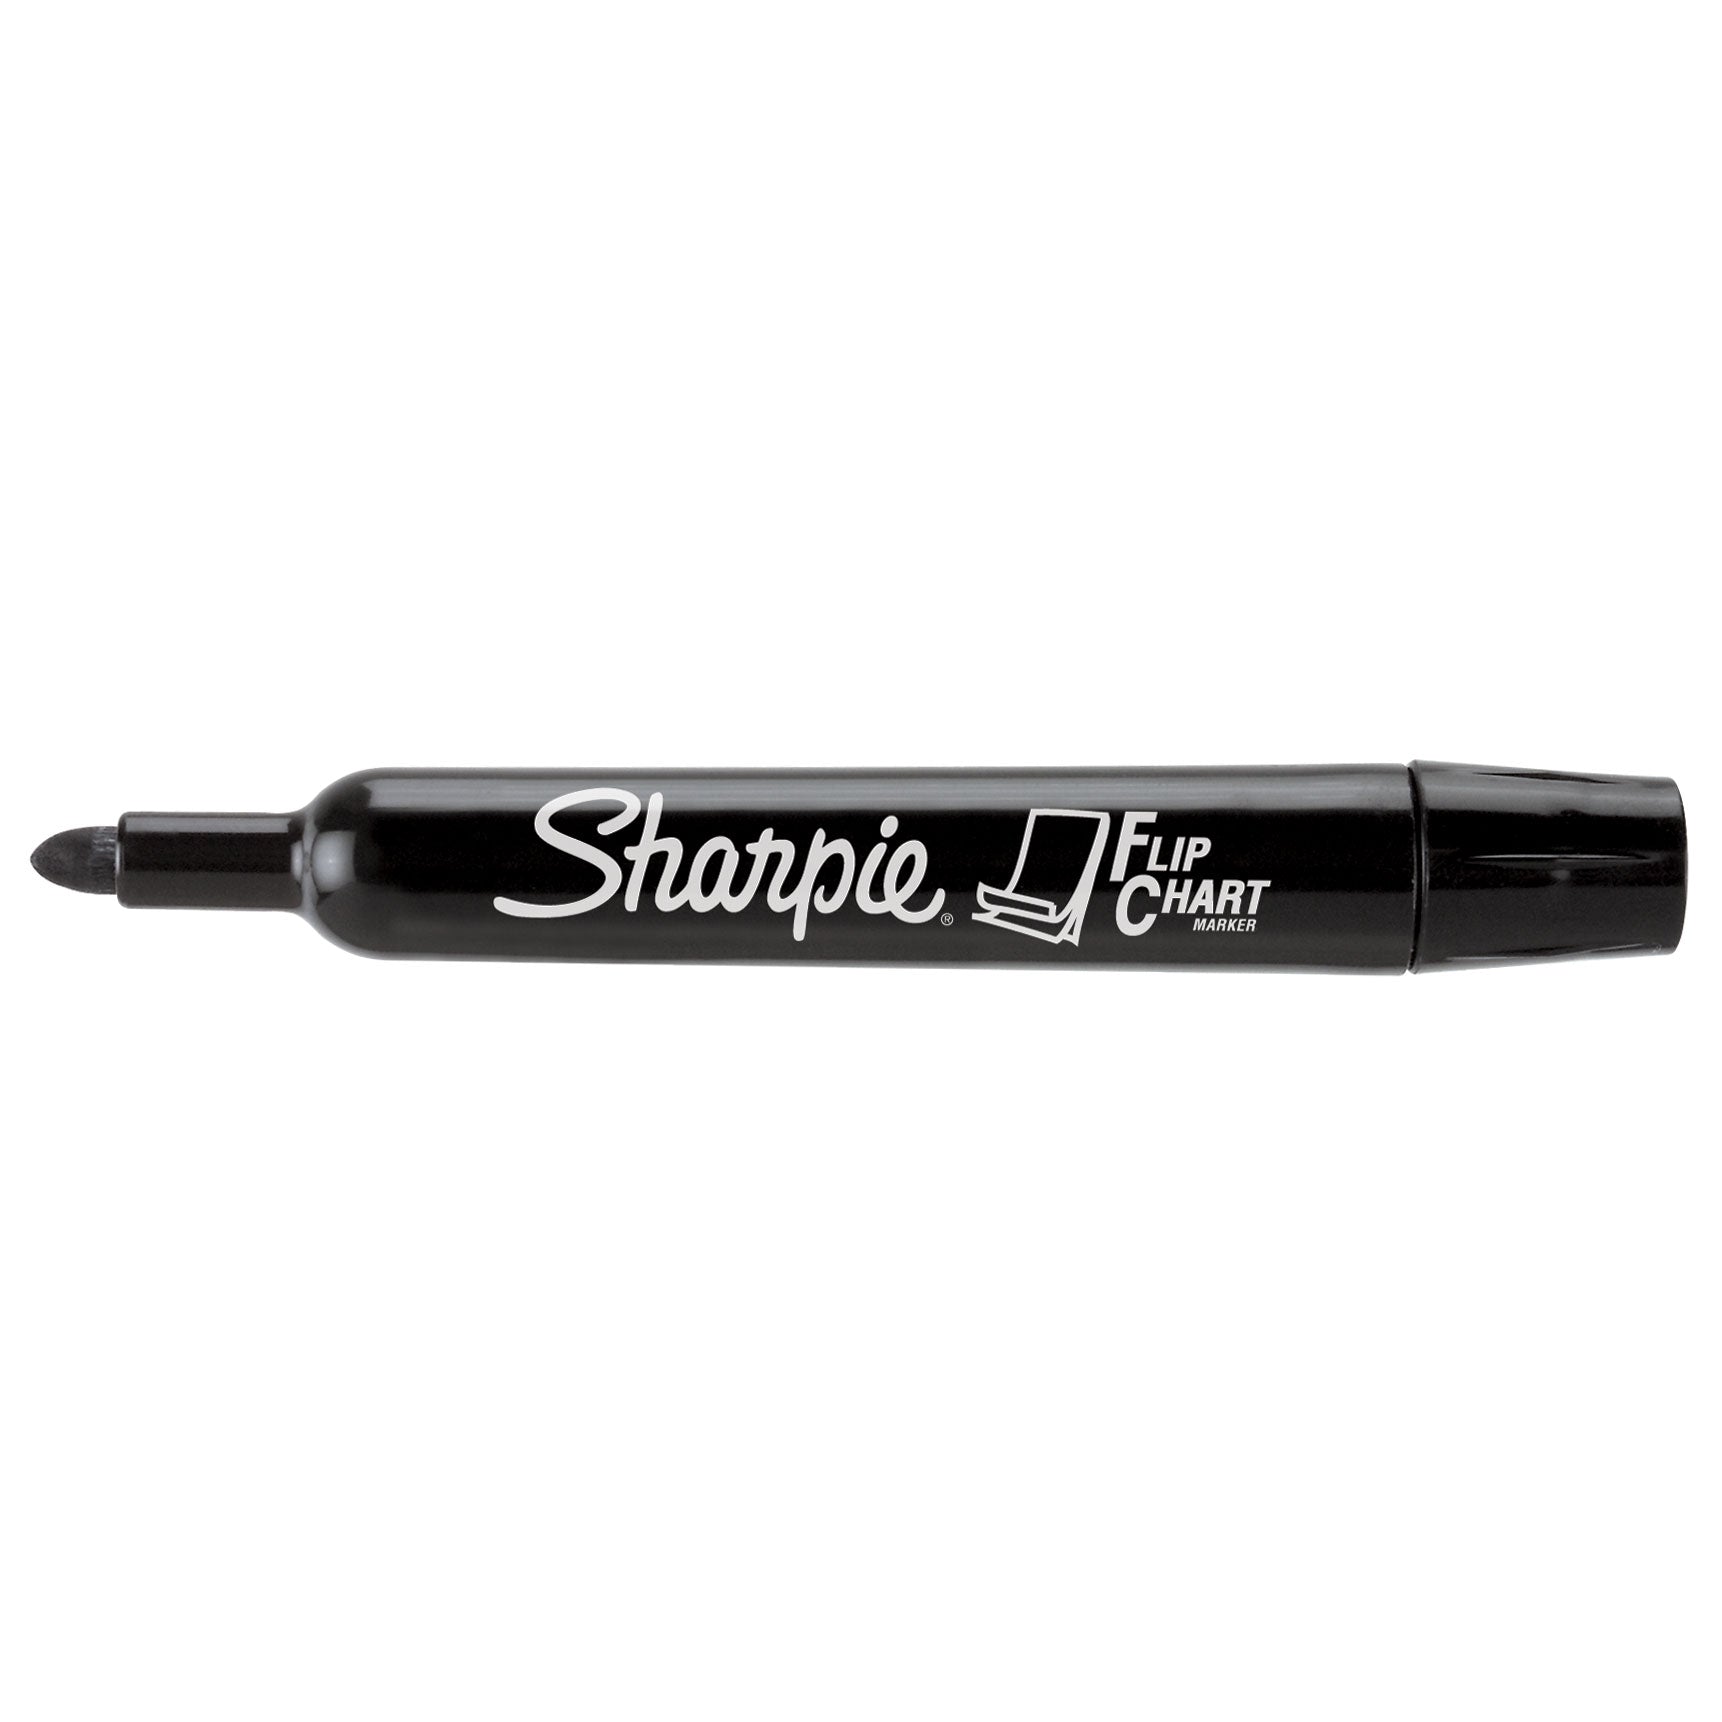 Sharpie Citrine Ultra Fine MarkerPens and Pencils